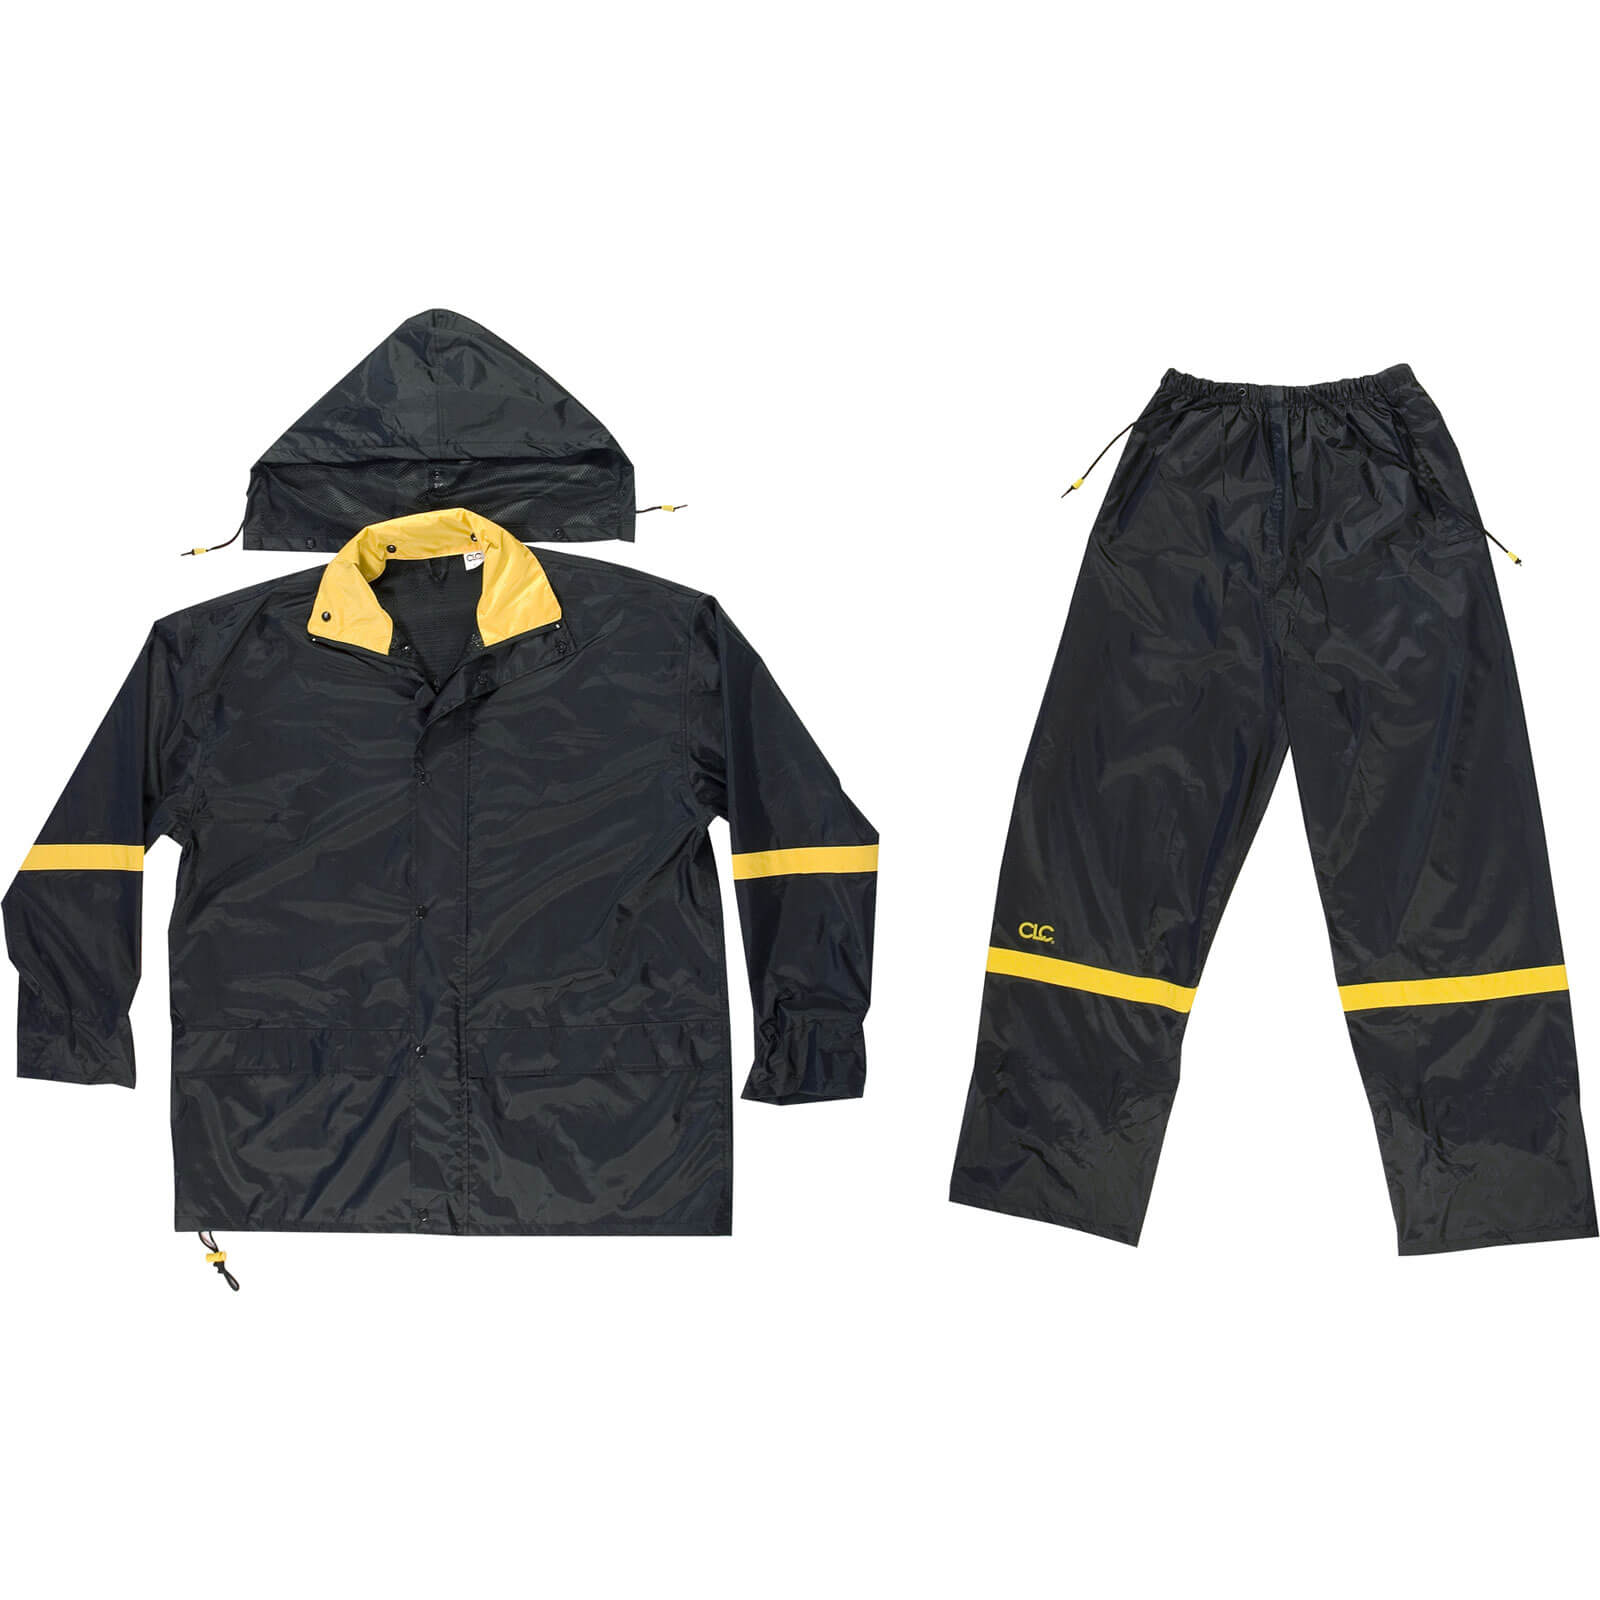 Kunys 3 Piece Black Nylon Water Resistant Suit 2XL